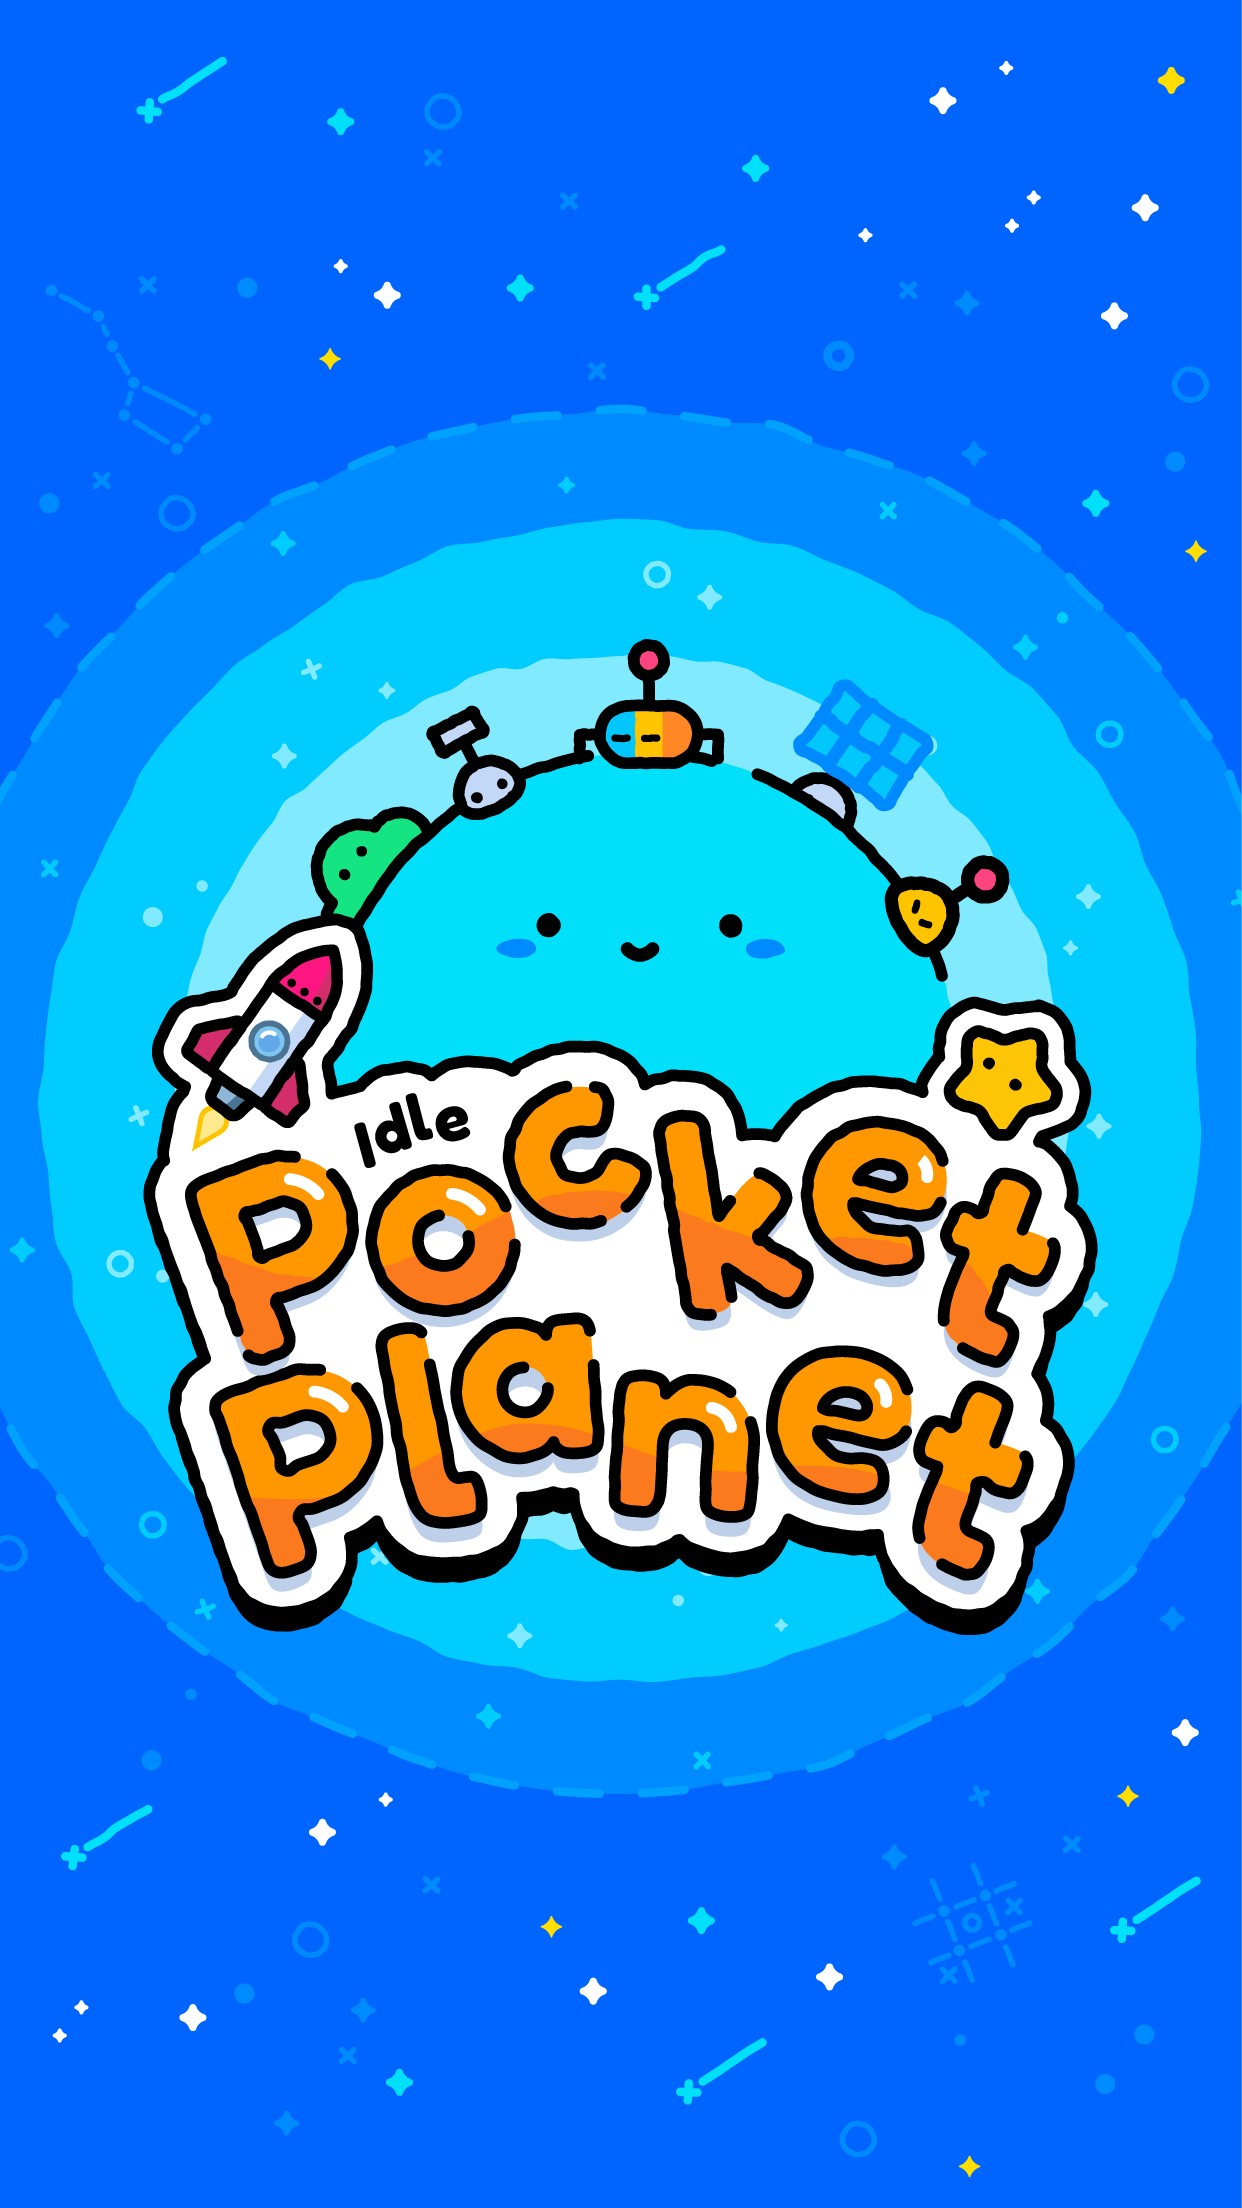 Screenshot 1 of Idle Pocket Planet 1.1.5